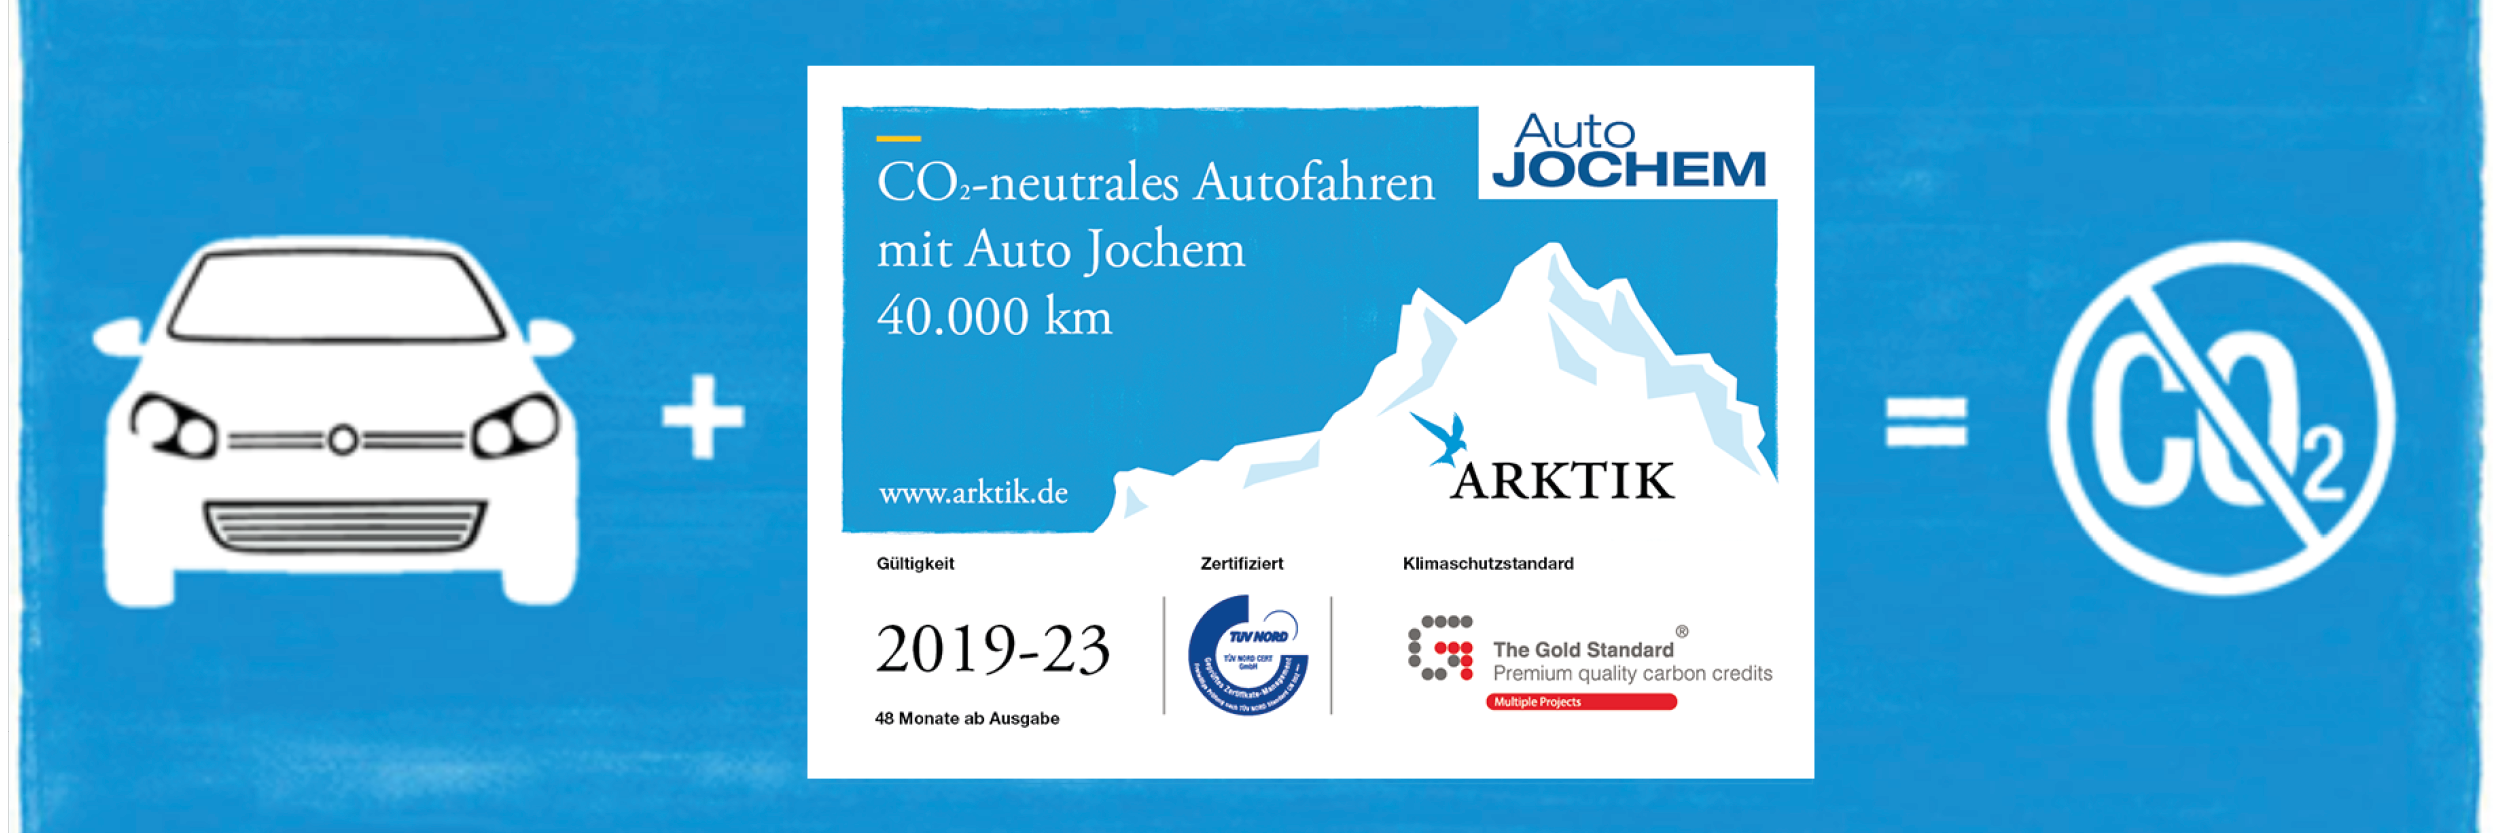 ARKTIK - CO2-neutrales Autofahren mit Auto Jochem